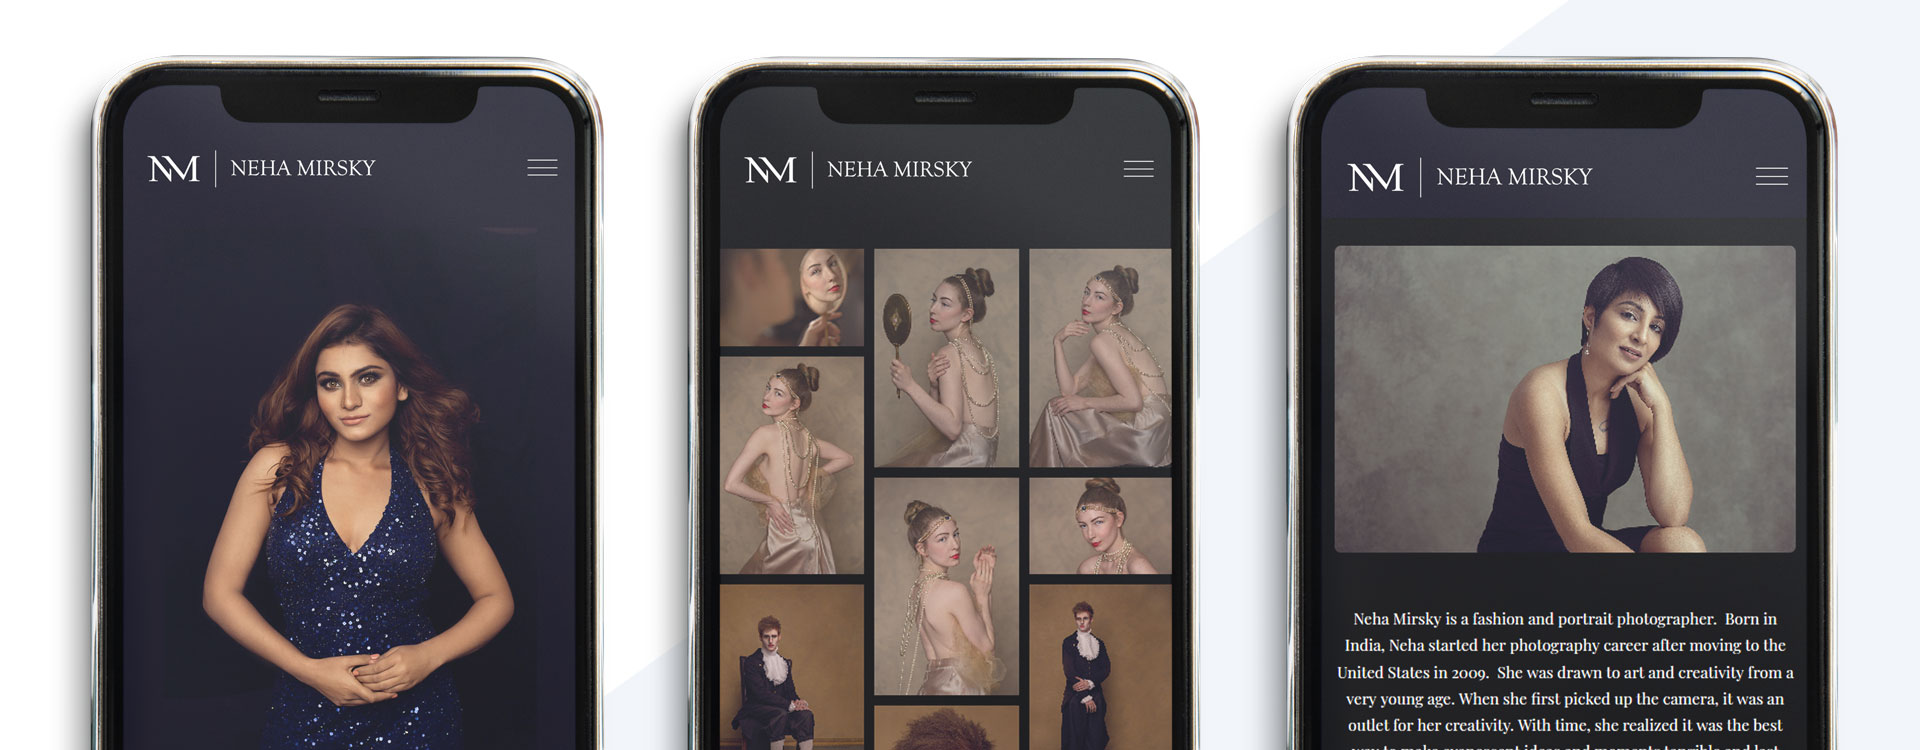 responsive web design for neha mirsky